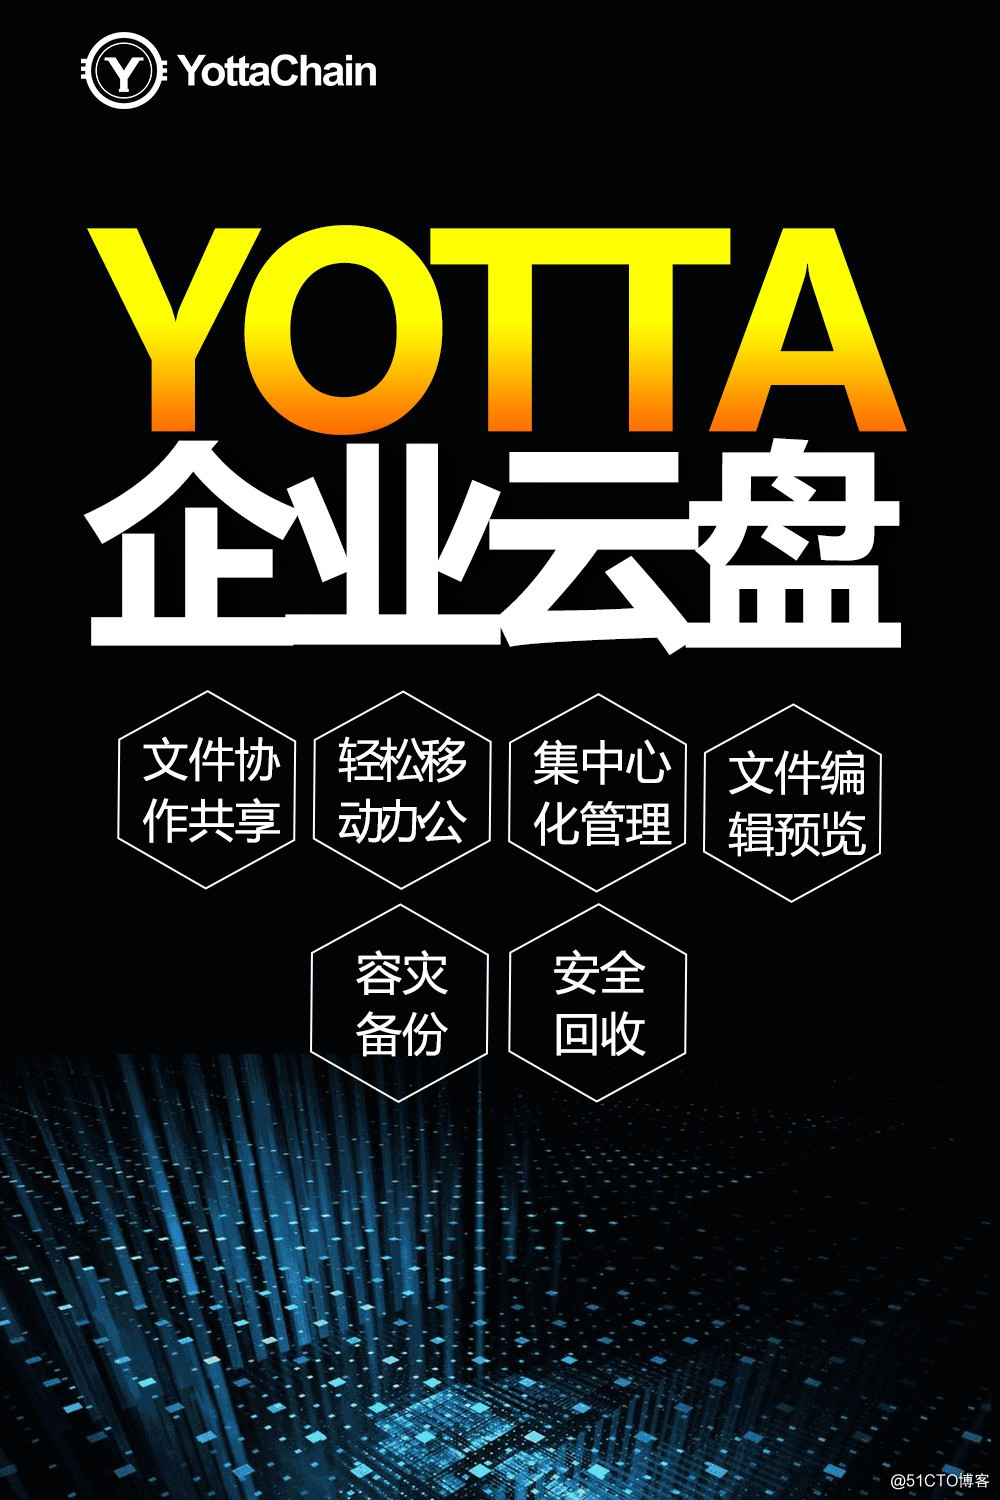 Yotta云盘：助力咨询服务行业的发展